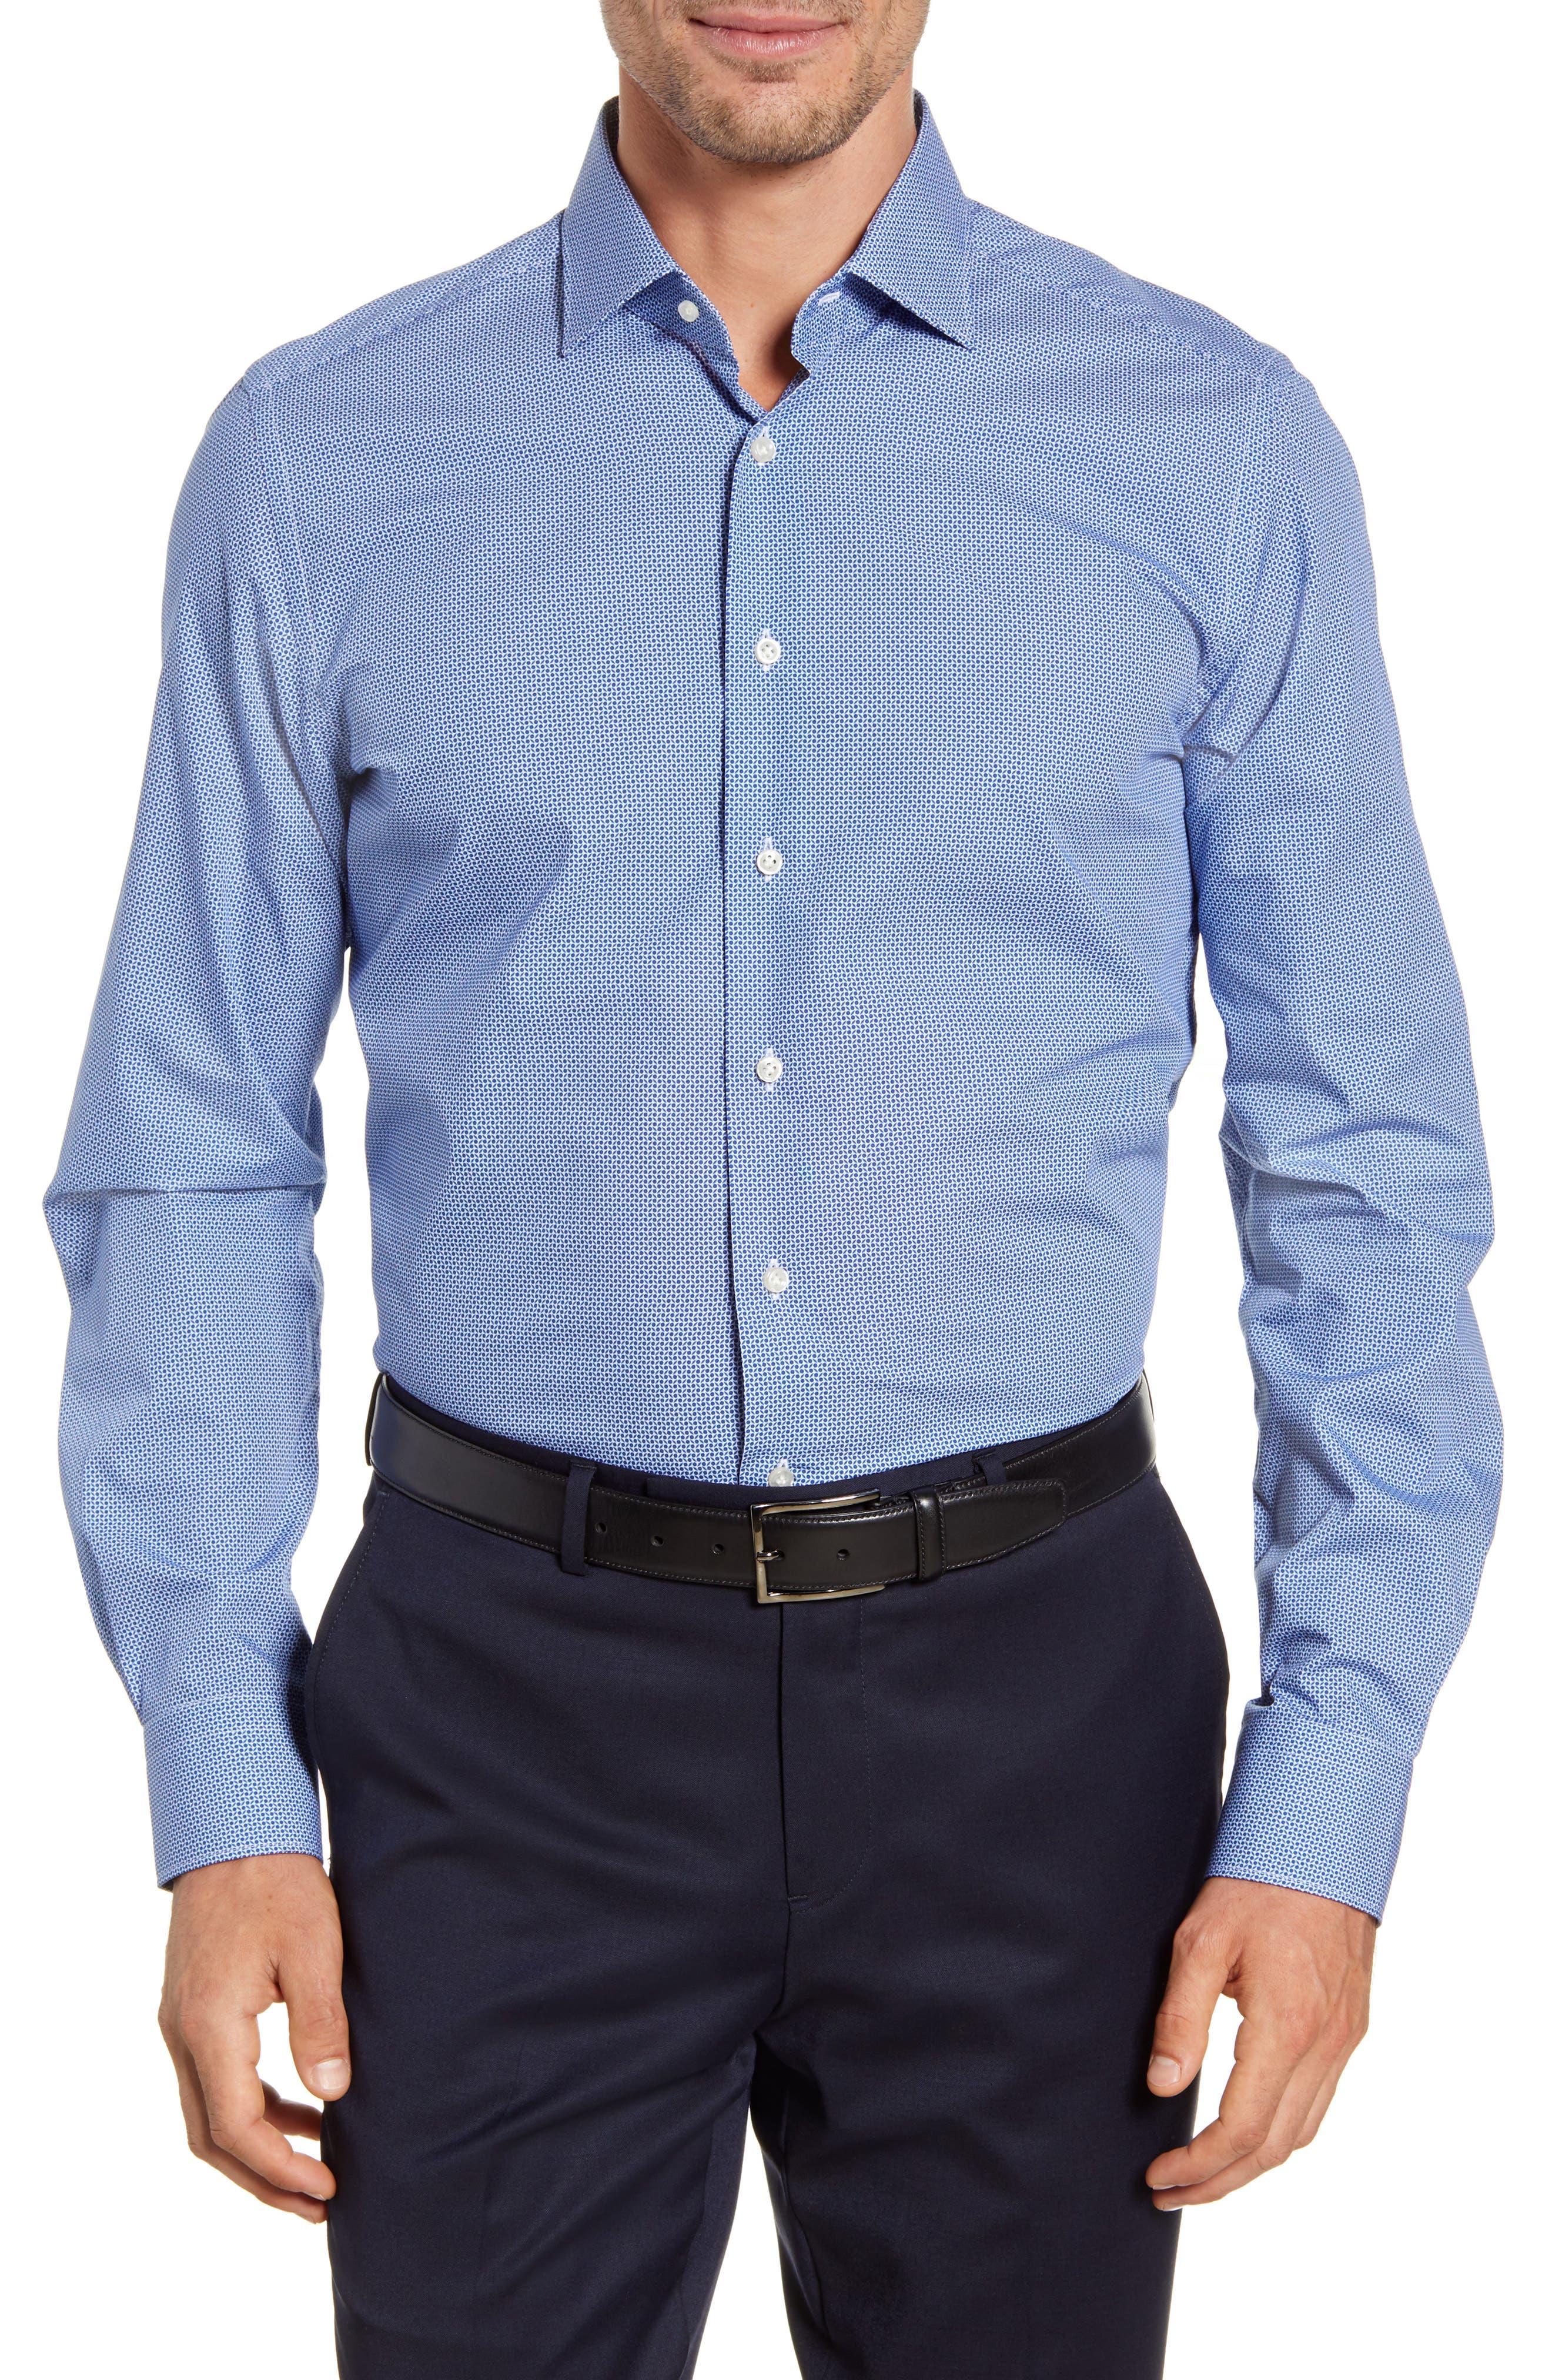 Emanuel Berg Regular Fit Button-Up Shirt in Navy at Nordstrom